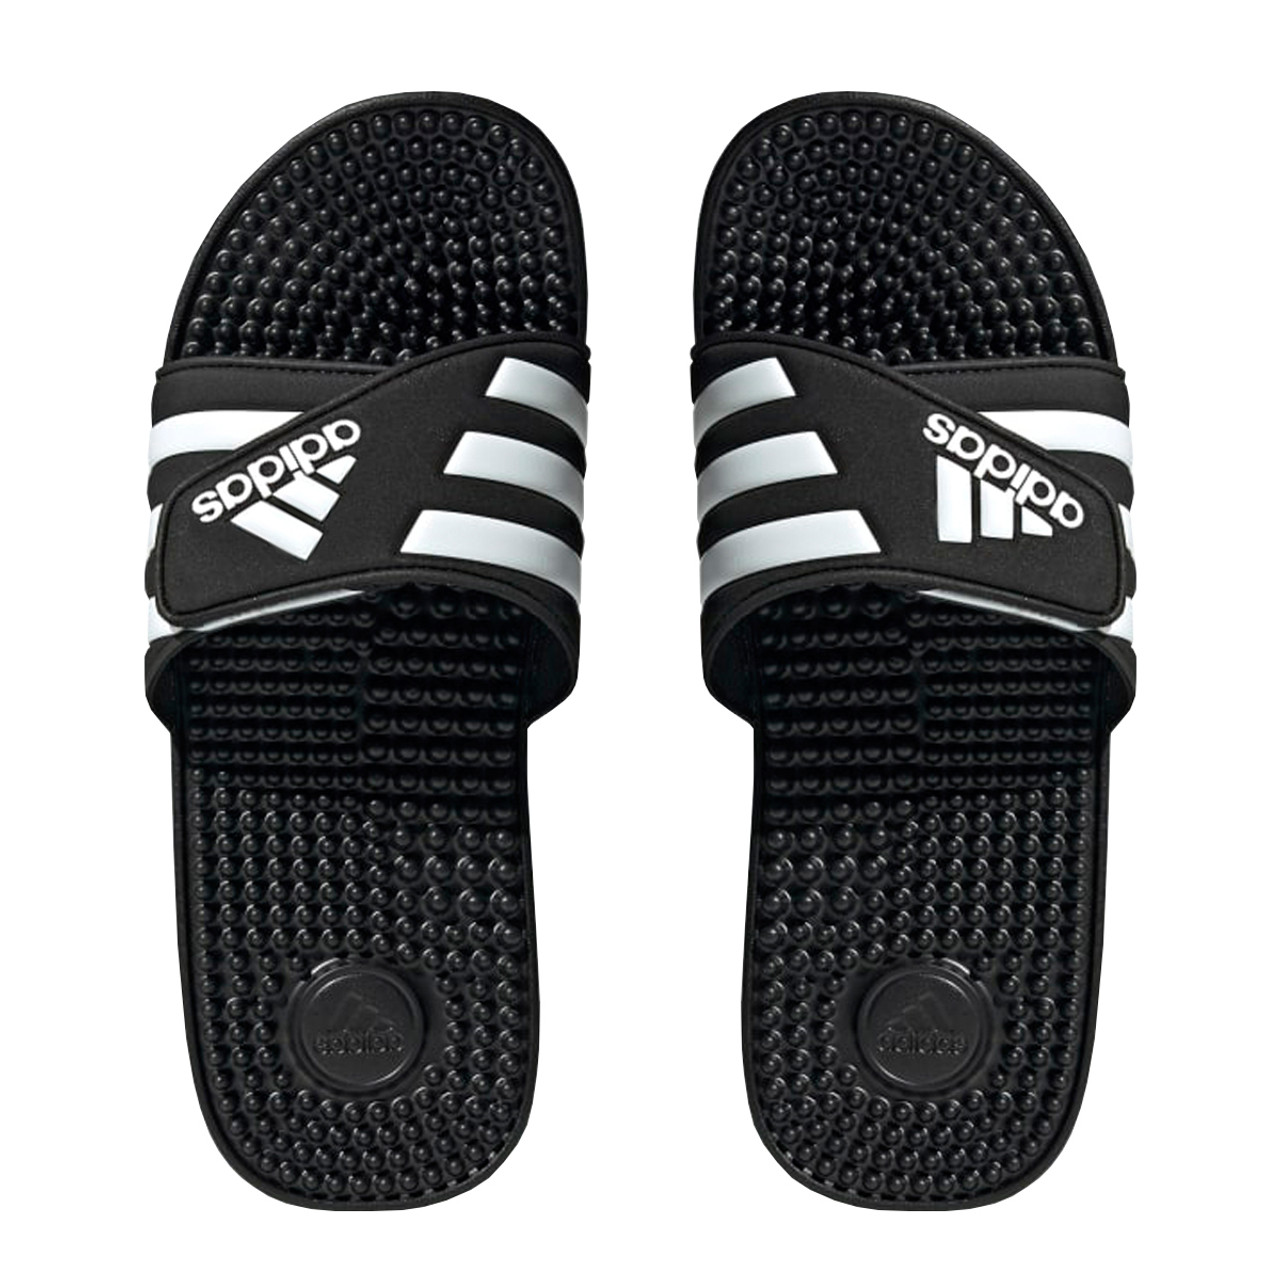 Adidas Adissage Sandals Unisex | Black & White Sandals